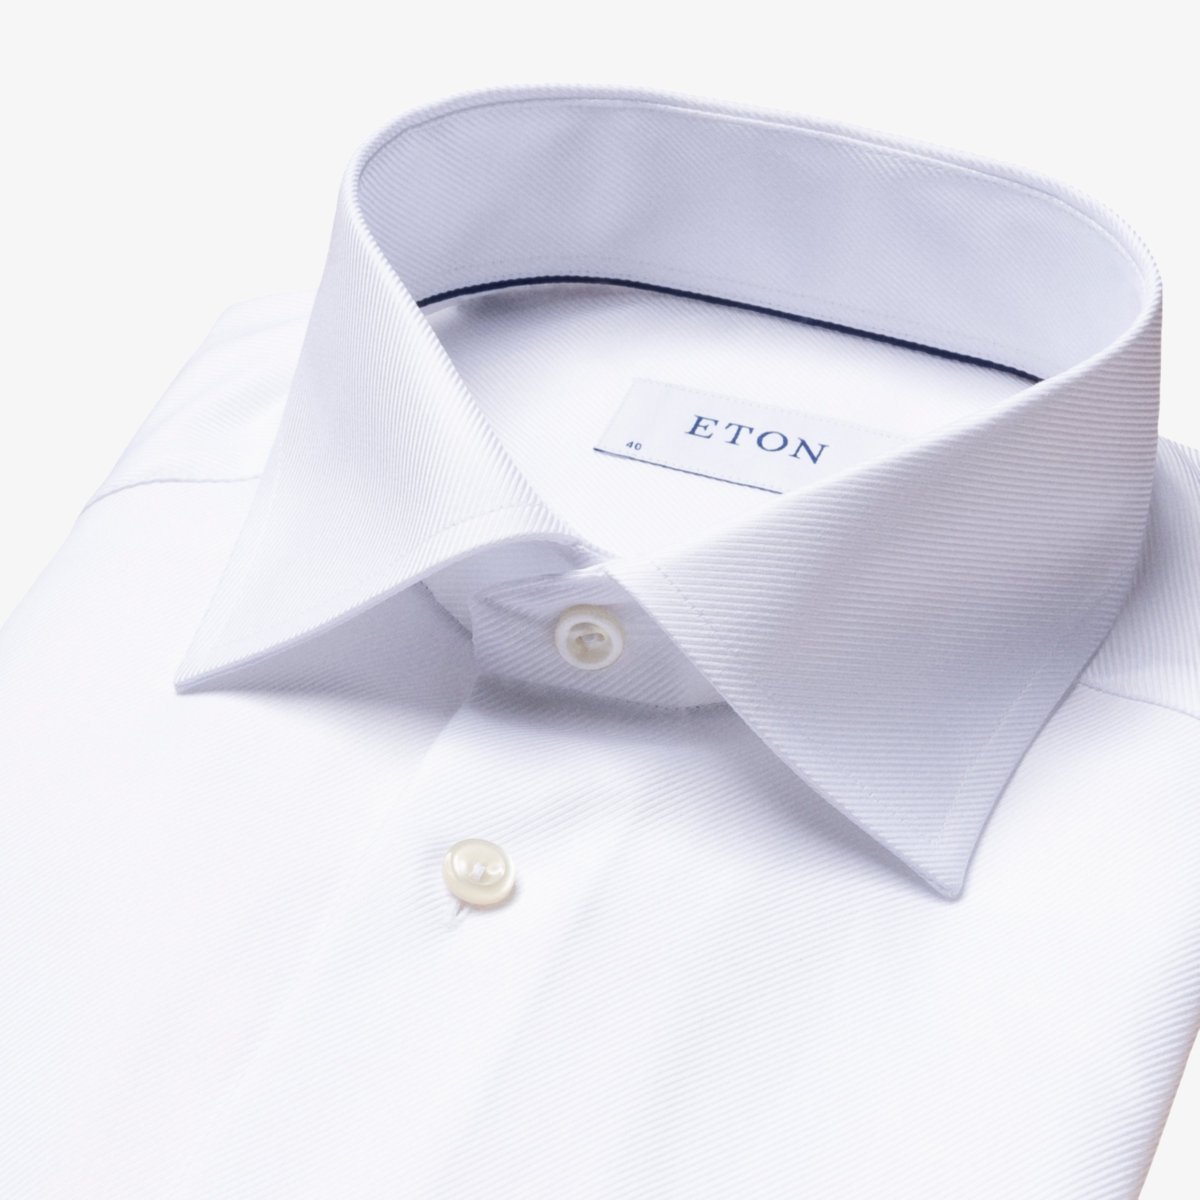 Eton white slim fit textured twill men's dress shirt